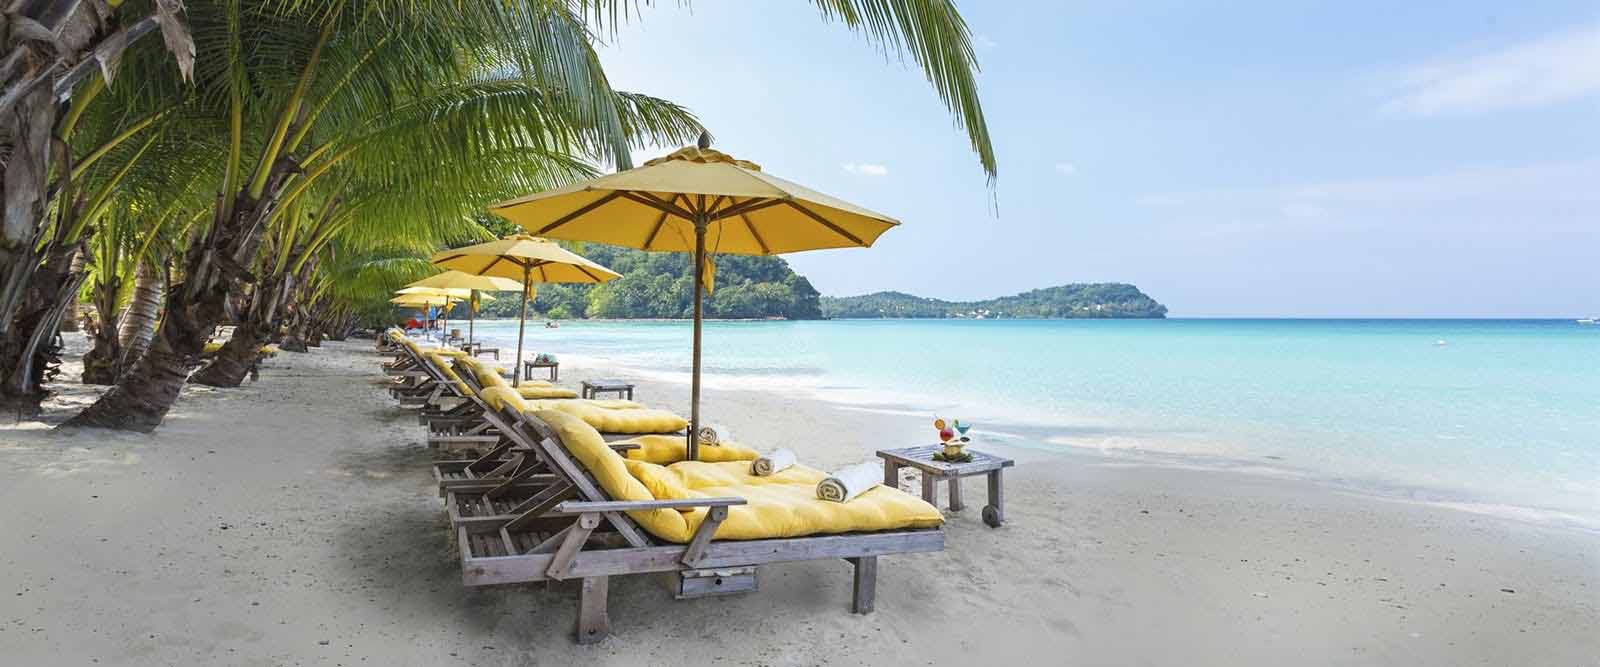 Beachfront lounge chair with view at Soneva Kiri luxury resort on Koh Kood, Thailand